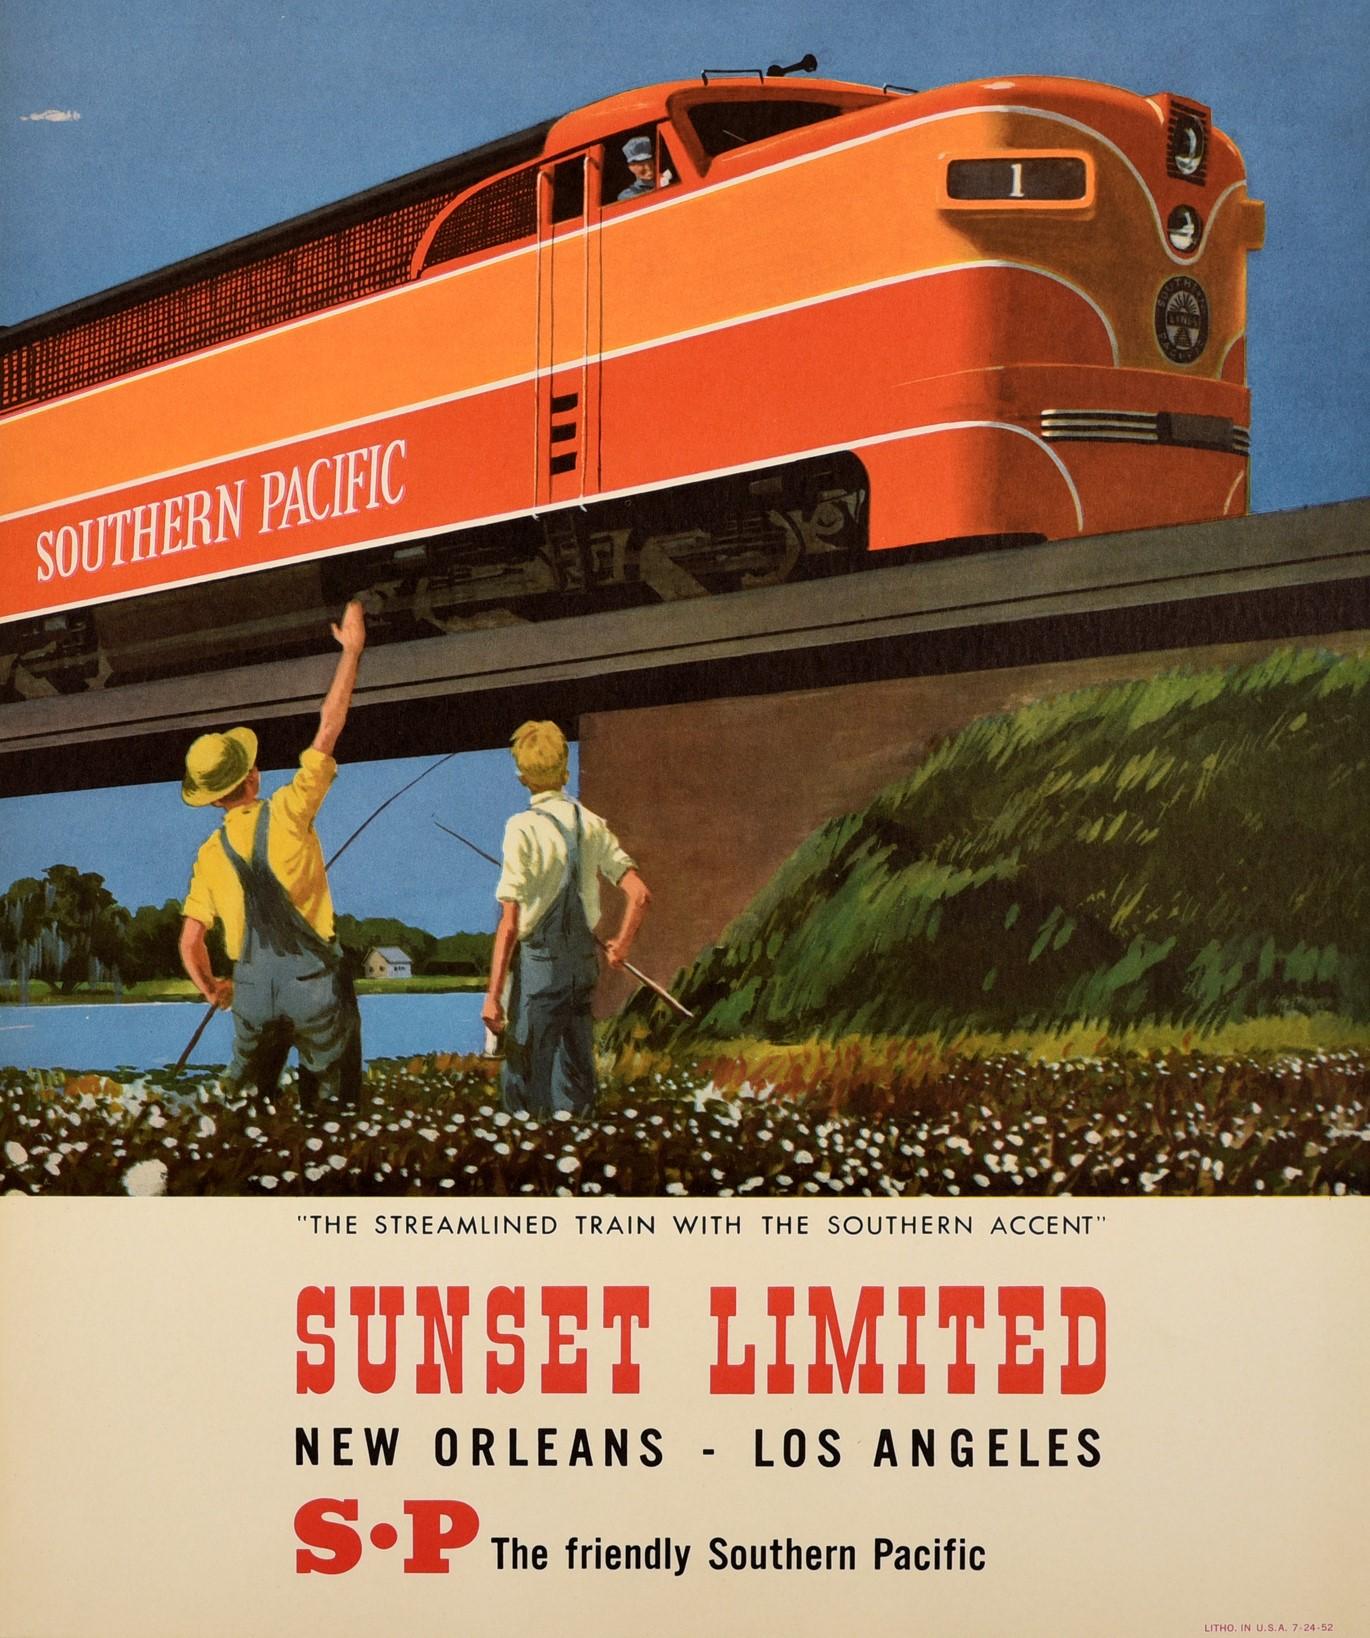 Missouri Pacific Lines Streamliners Locomotives Travel Advertisement Art Poster 